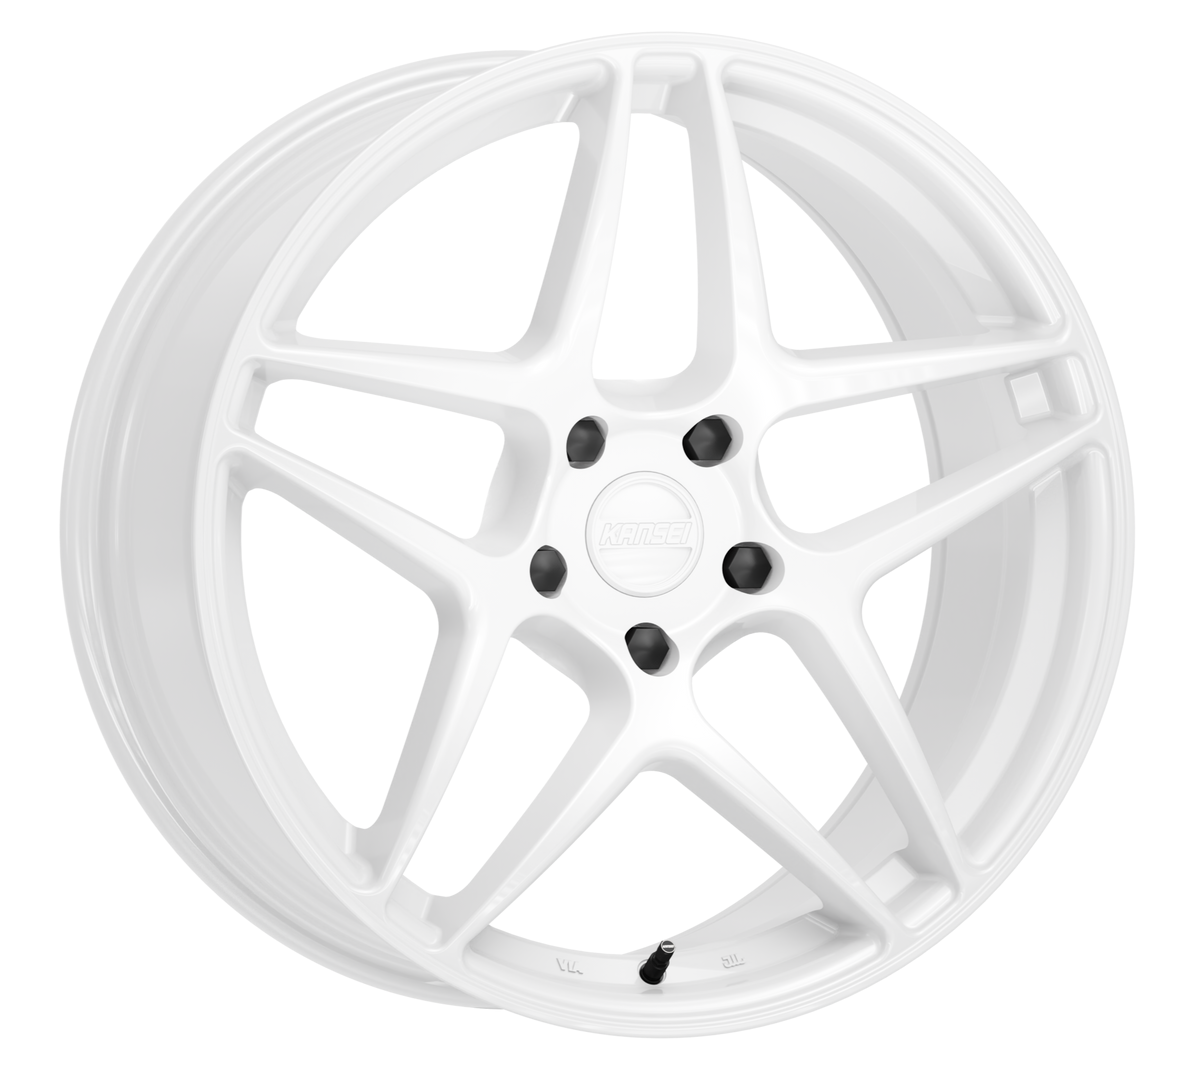 K15W ASTRO Wheel, Size: 19" x 10.50", Bolt Pattern: 5 x 112 mm, Backspace: 6.22" [Finish: Gloss White]